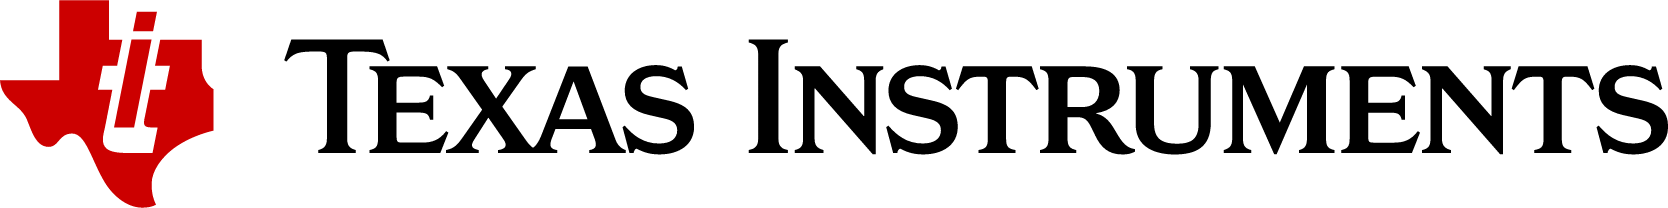 Texas Instruments logo large (transparent PNG)